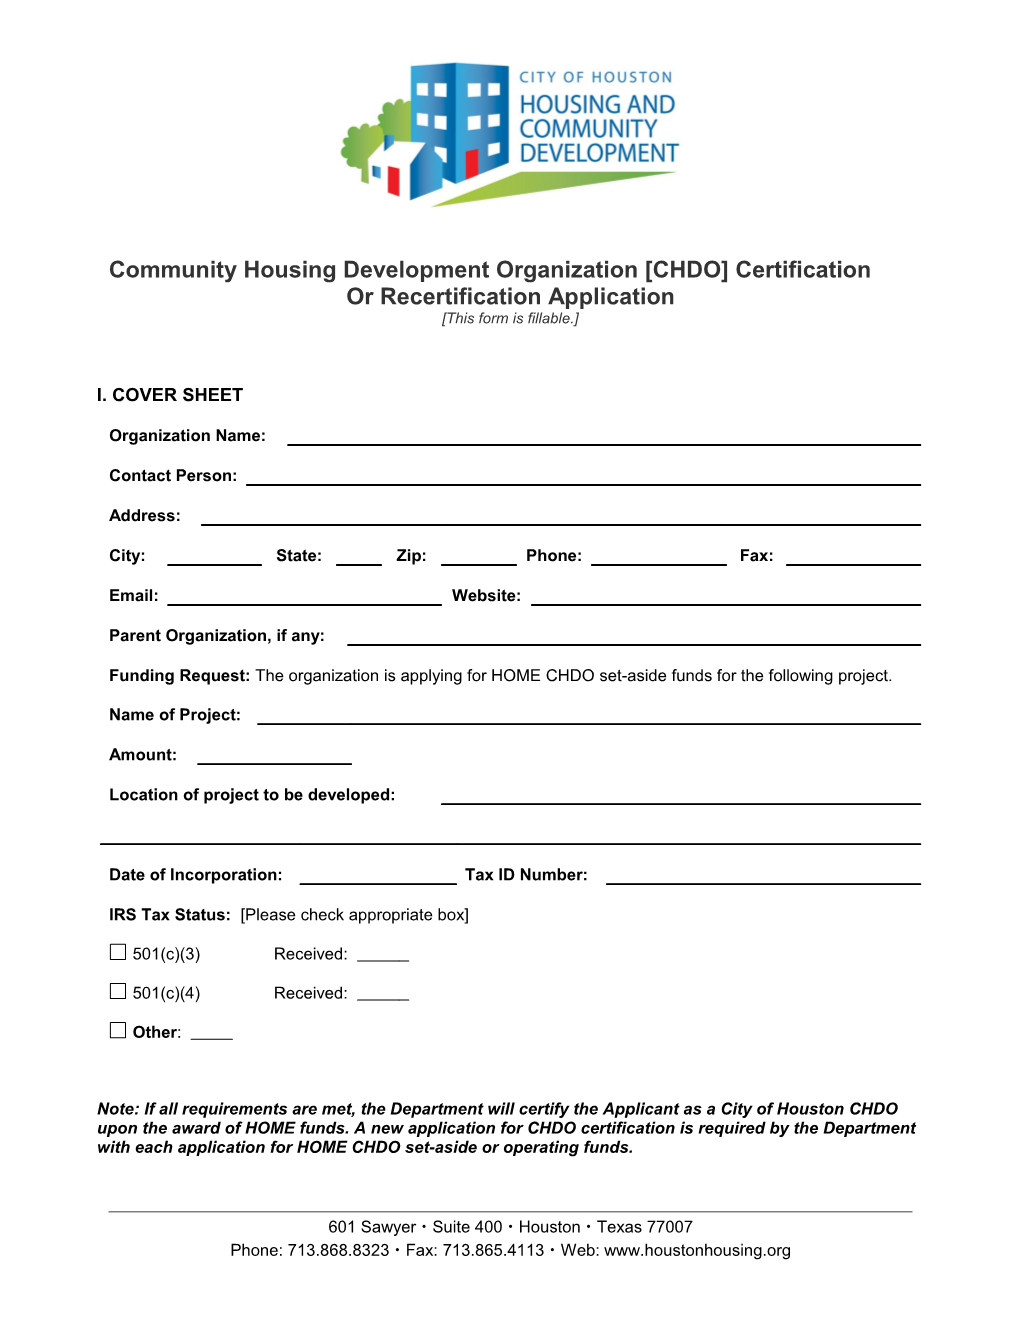 Community Housing Development Organization (CHDO) Certification